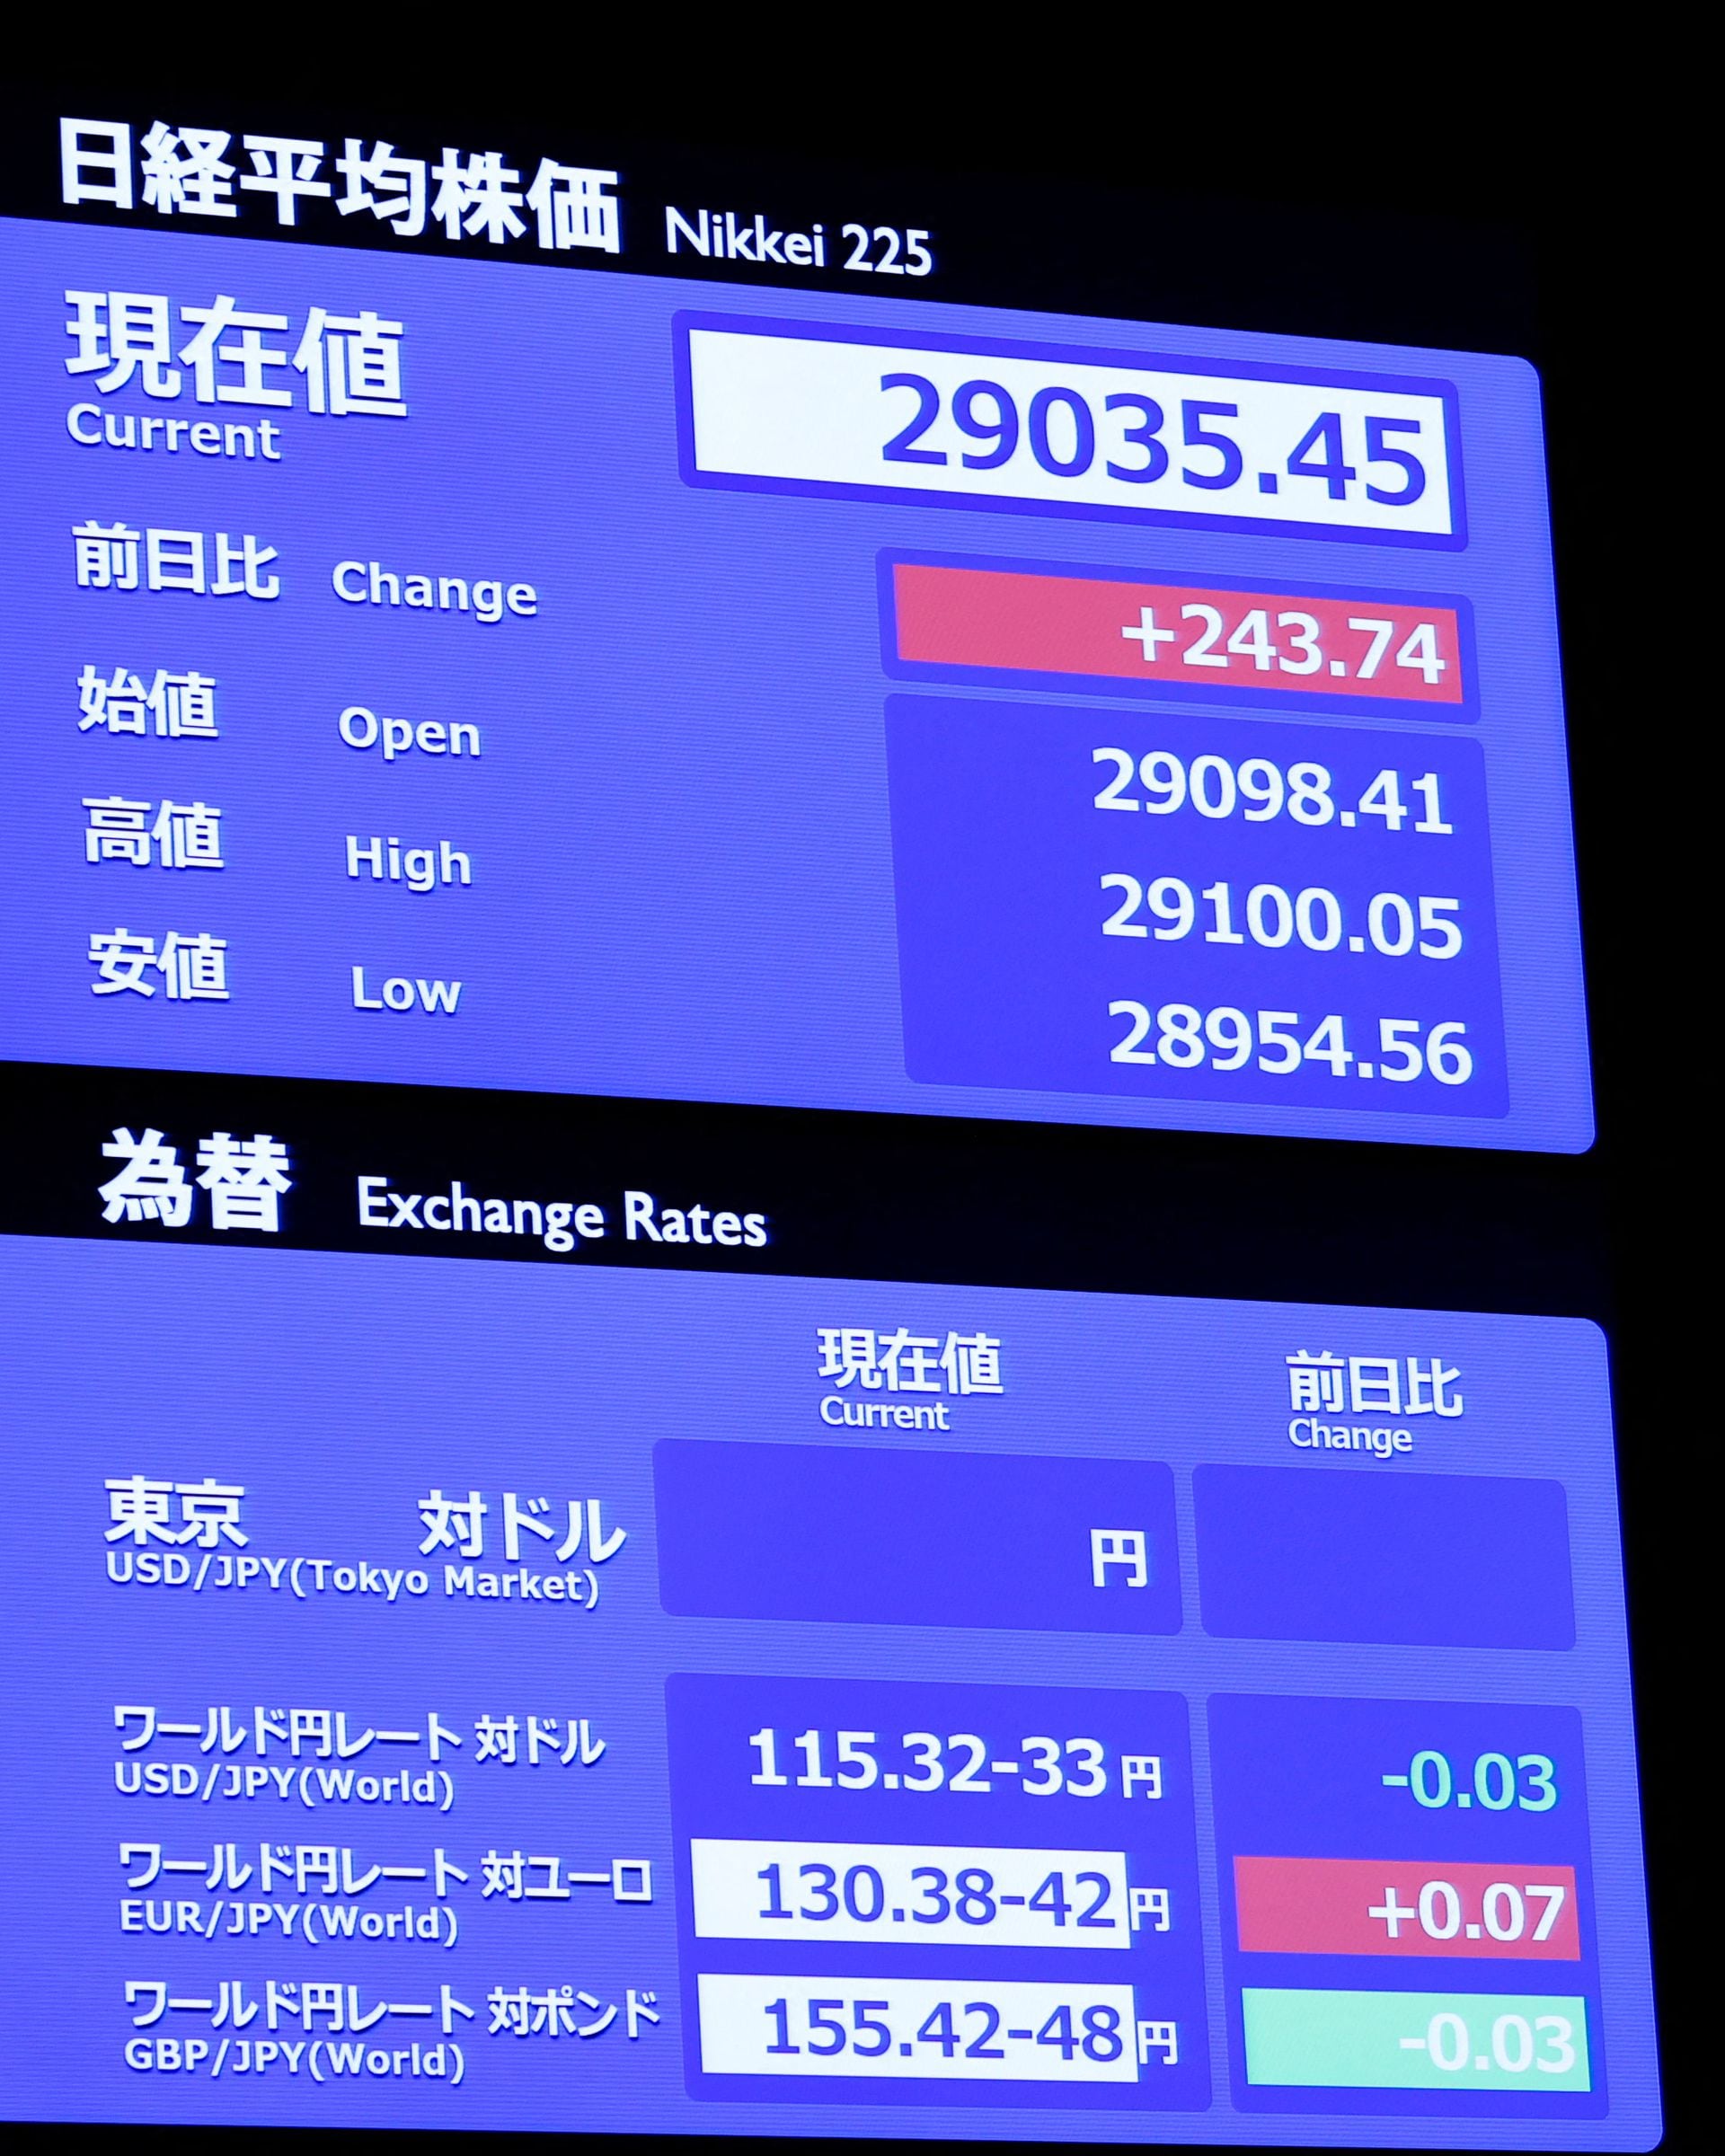 Nikkei (^N) Charts, Data & News - Yahoo Finance